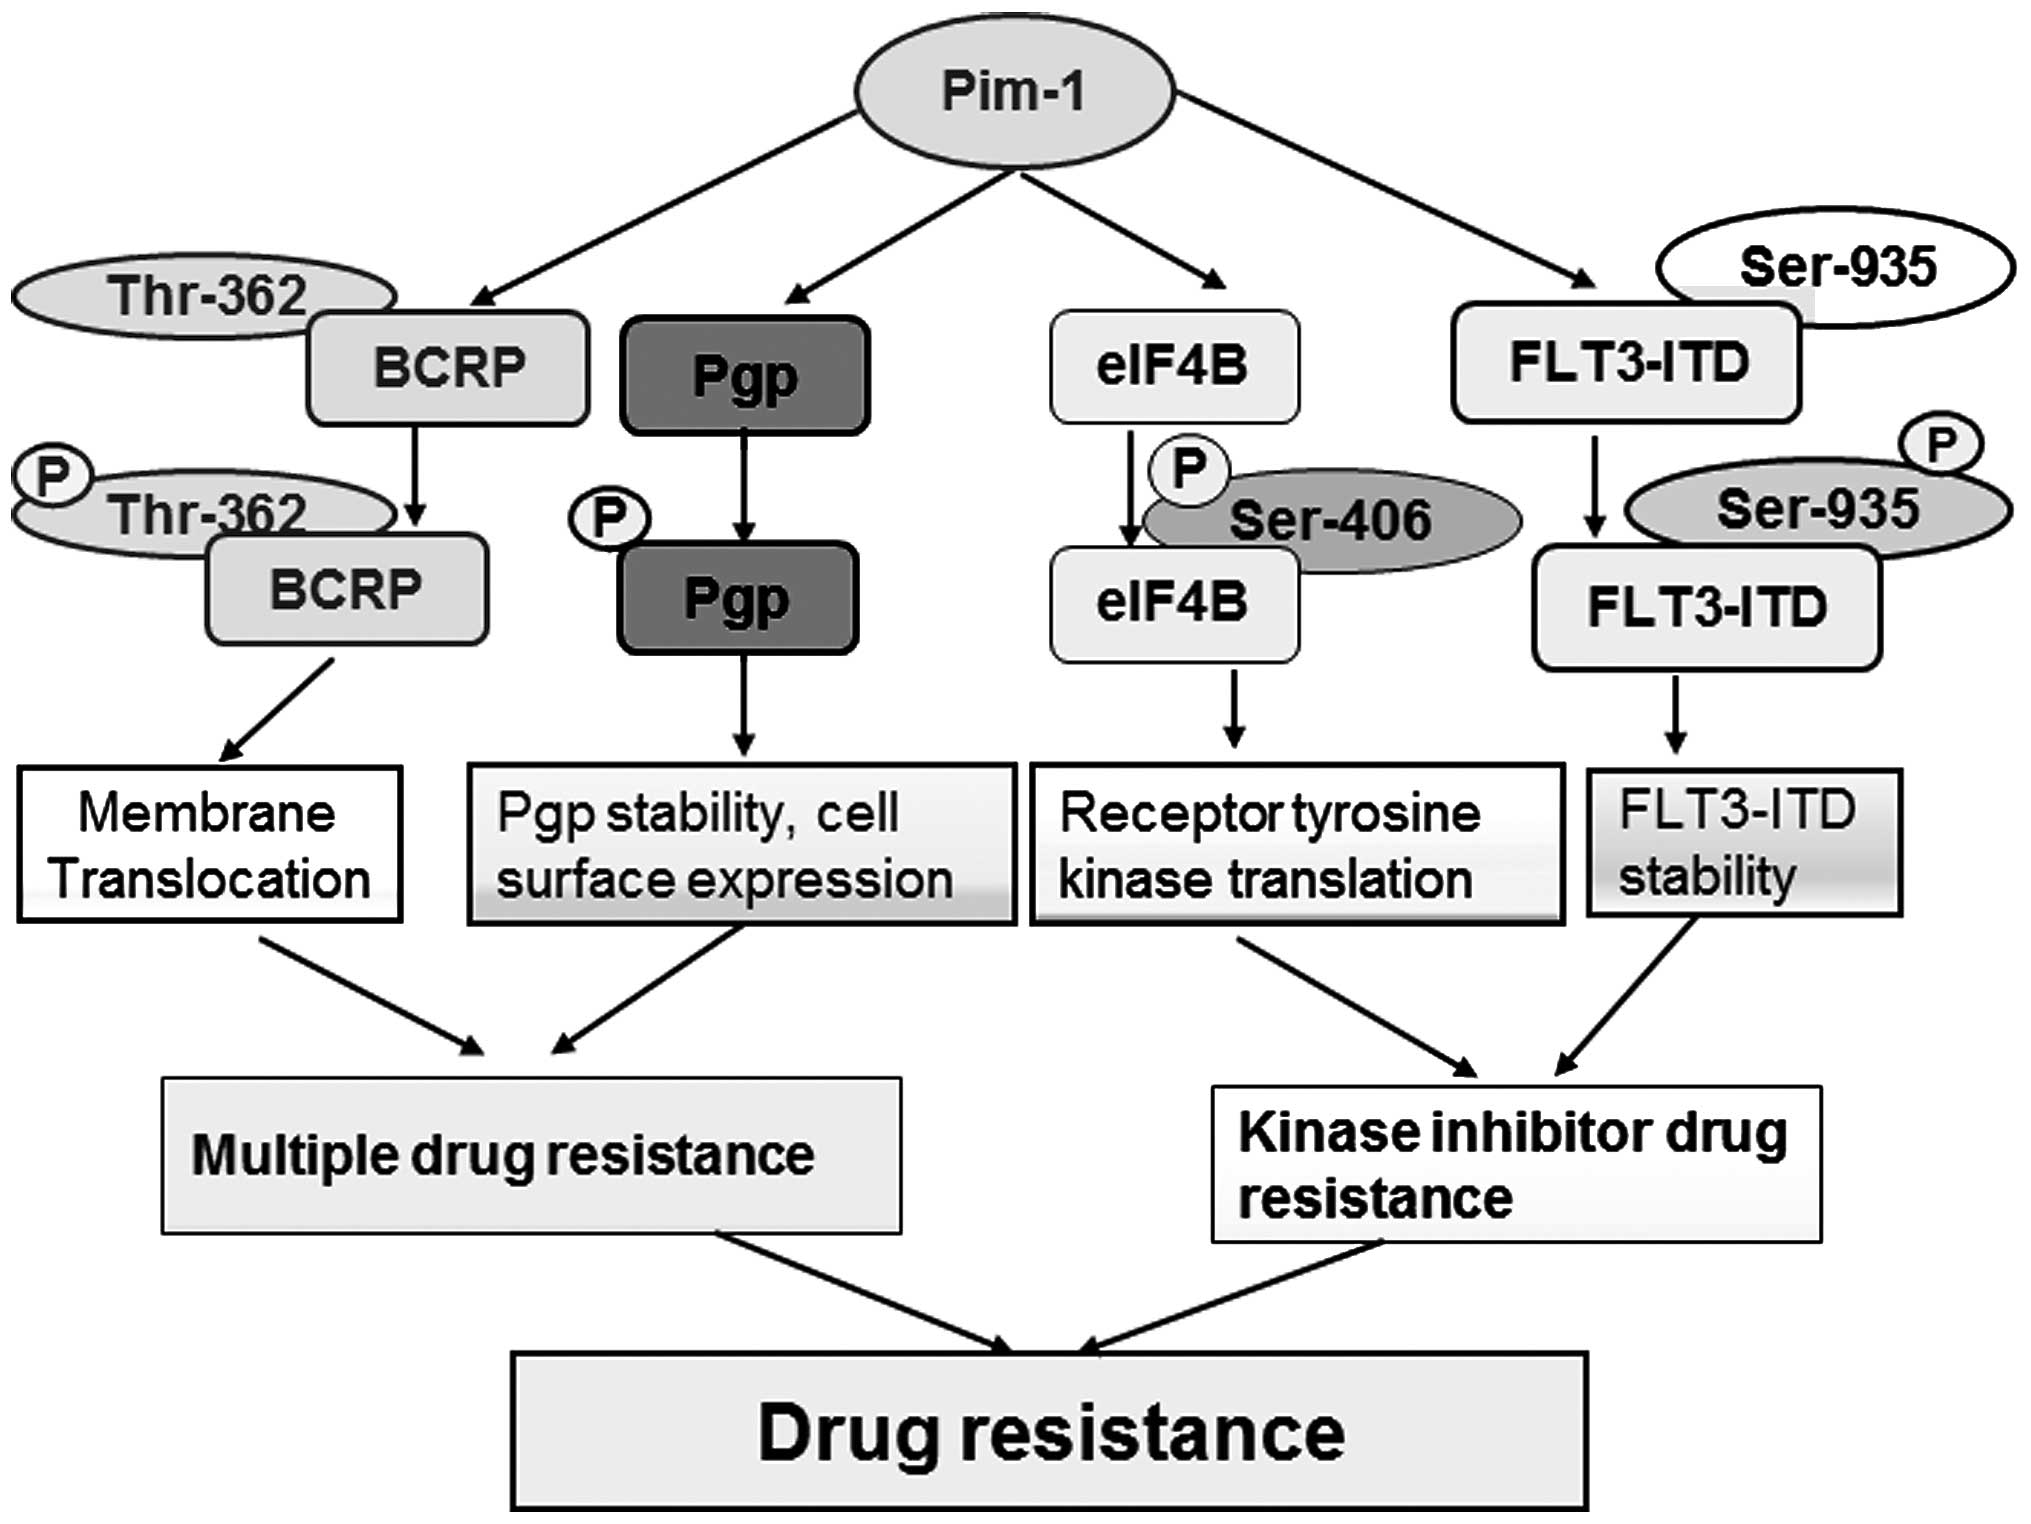 Pim kinase inhibitor does not sensitize cells expressing 